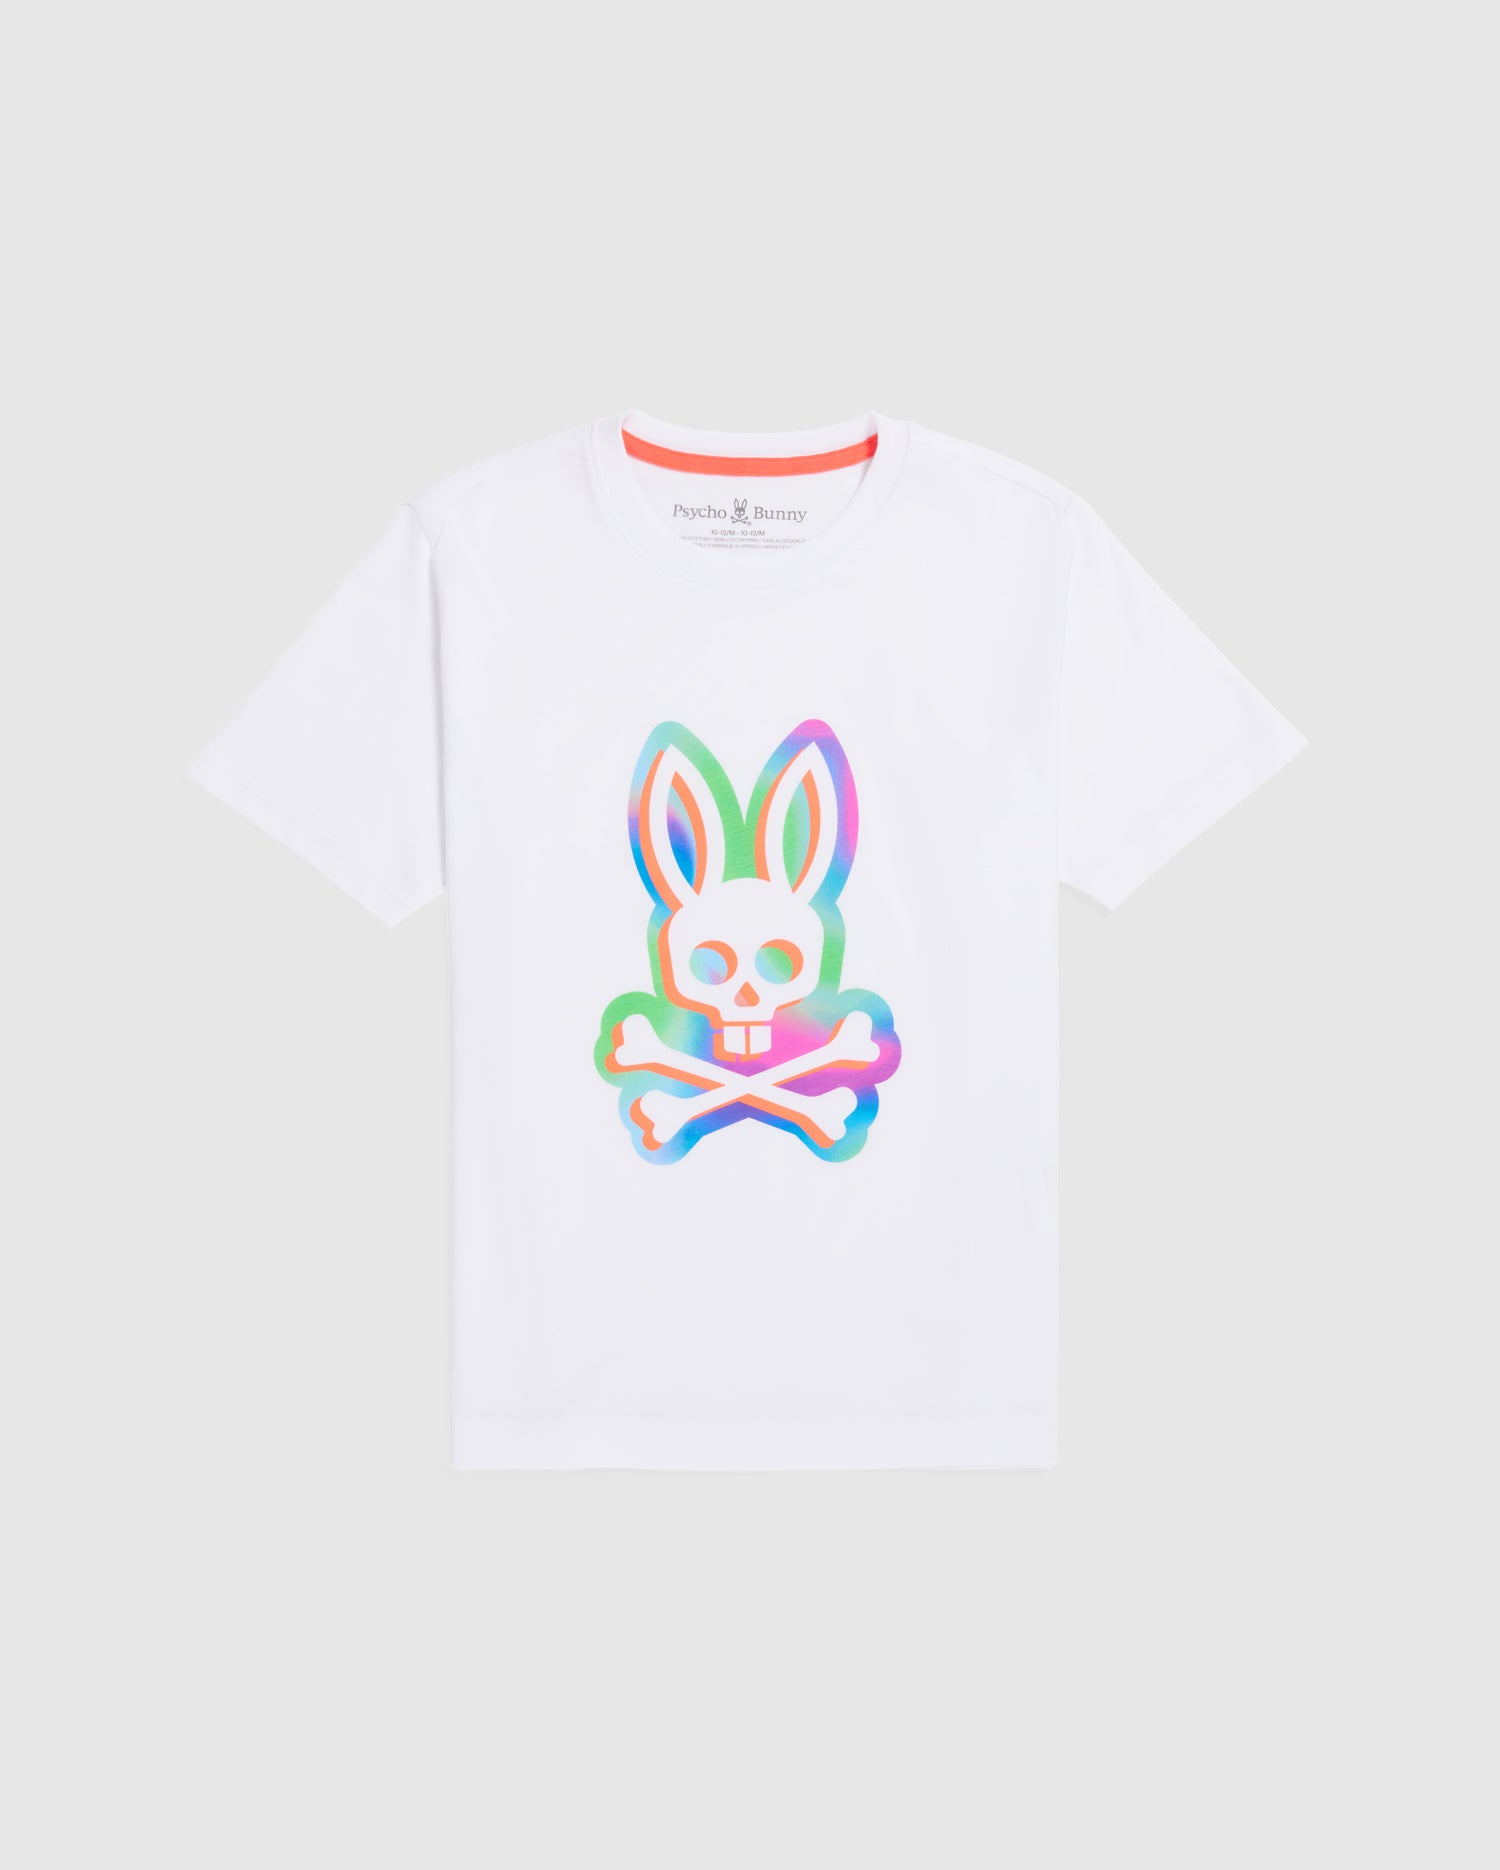 Psycho Bunny Little/Big Boys 5-20 Short Sleeve Montgomery T-Shirt